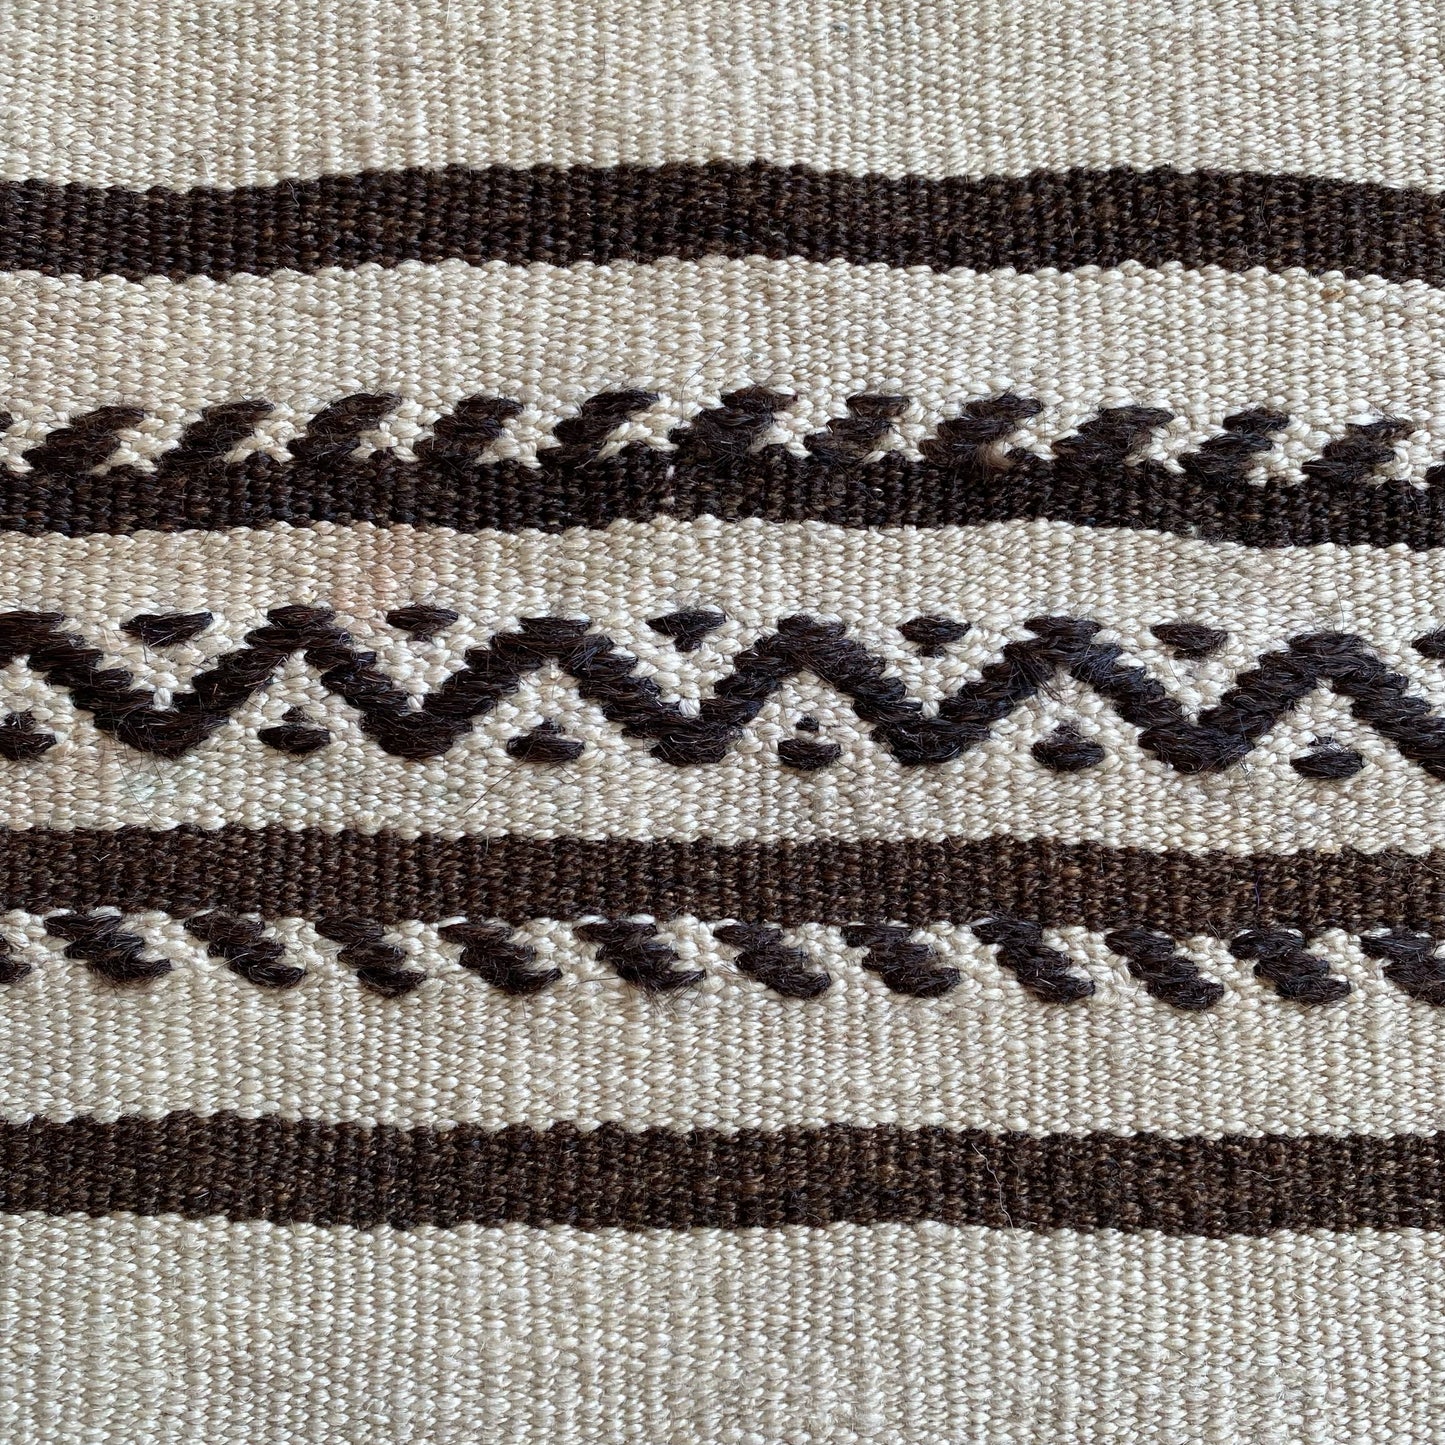 Vintage Hand-Woven Turkish Kilim Rug (1’ 10.5” x 3’11”)